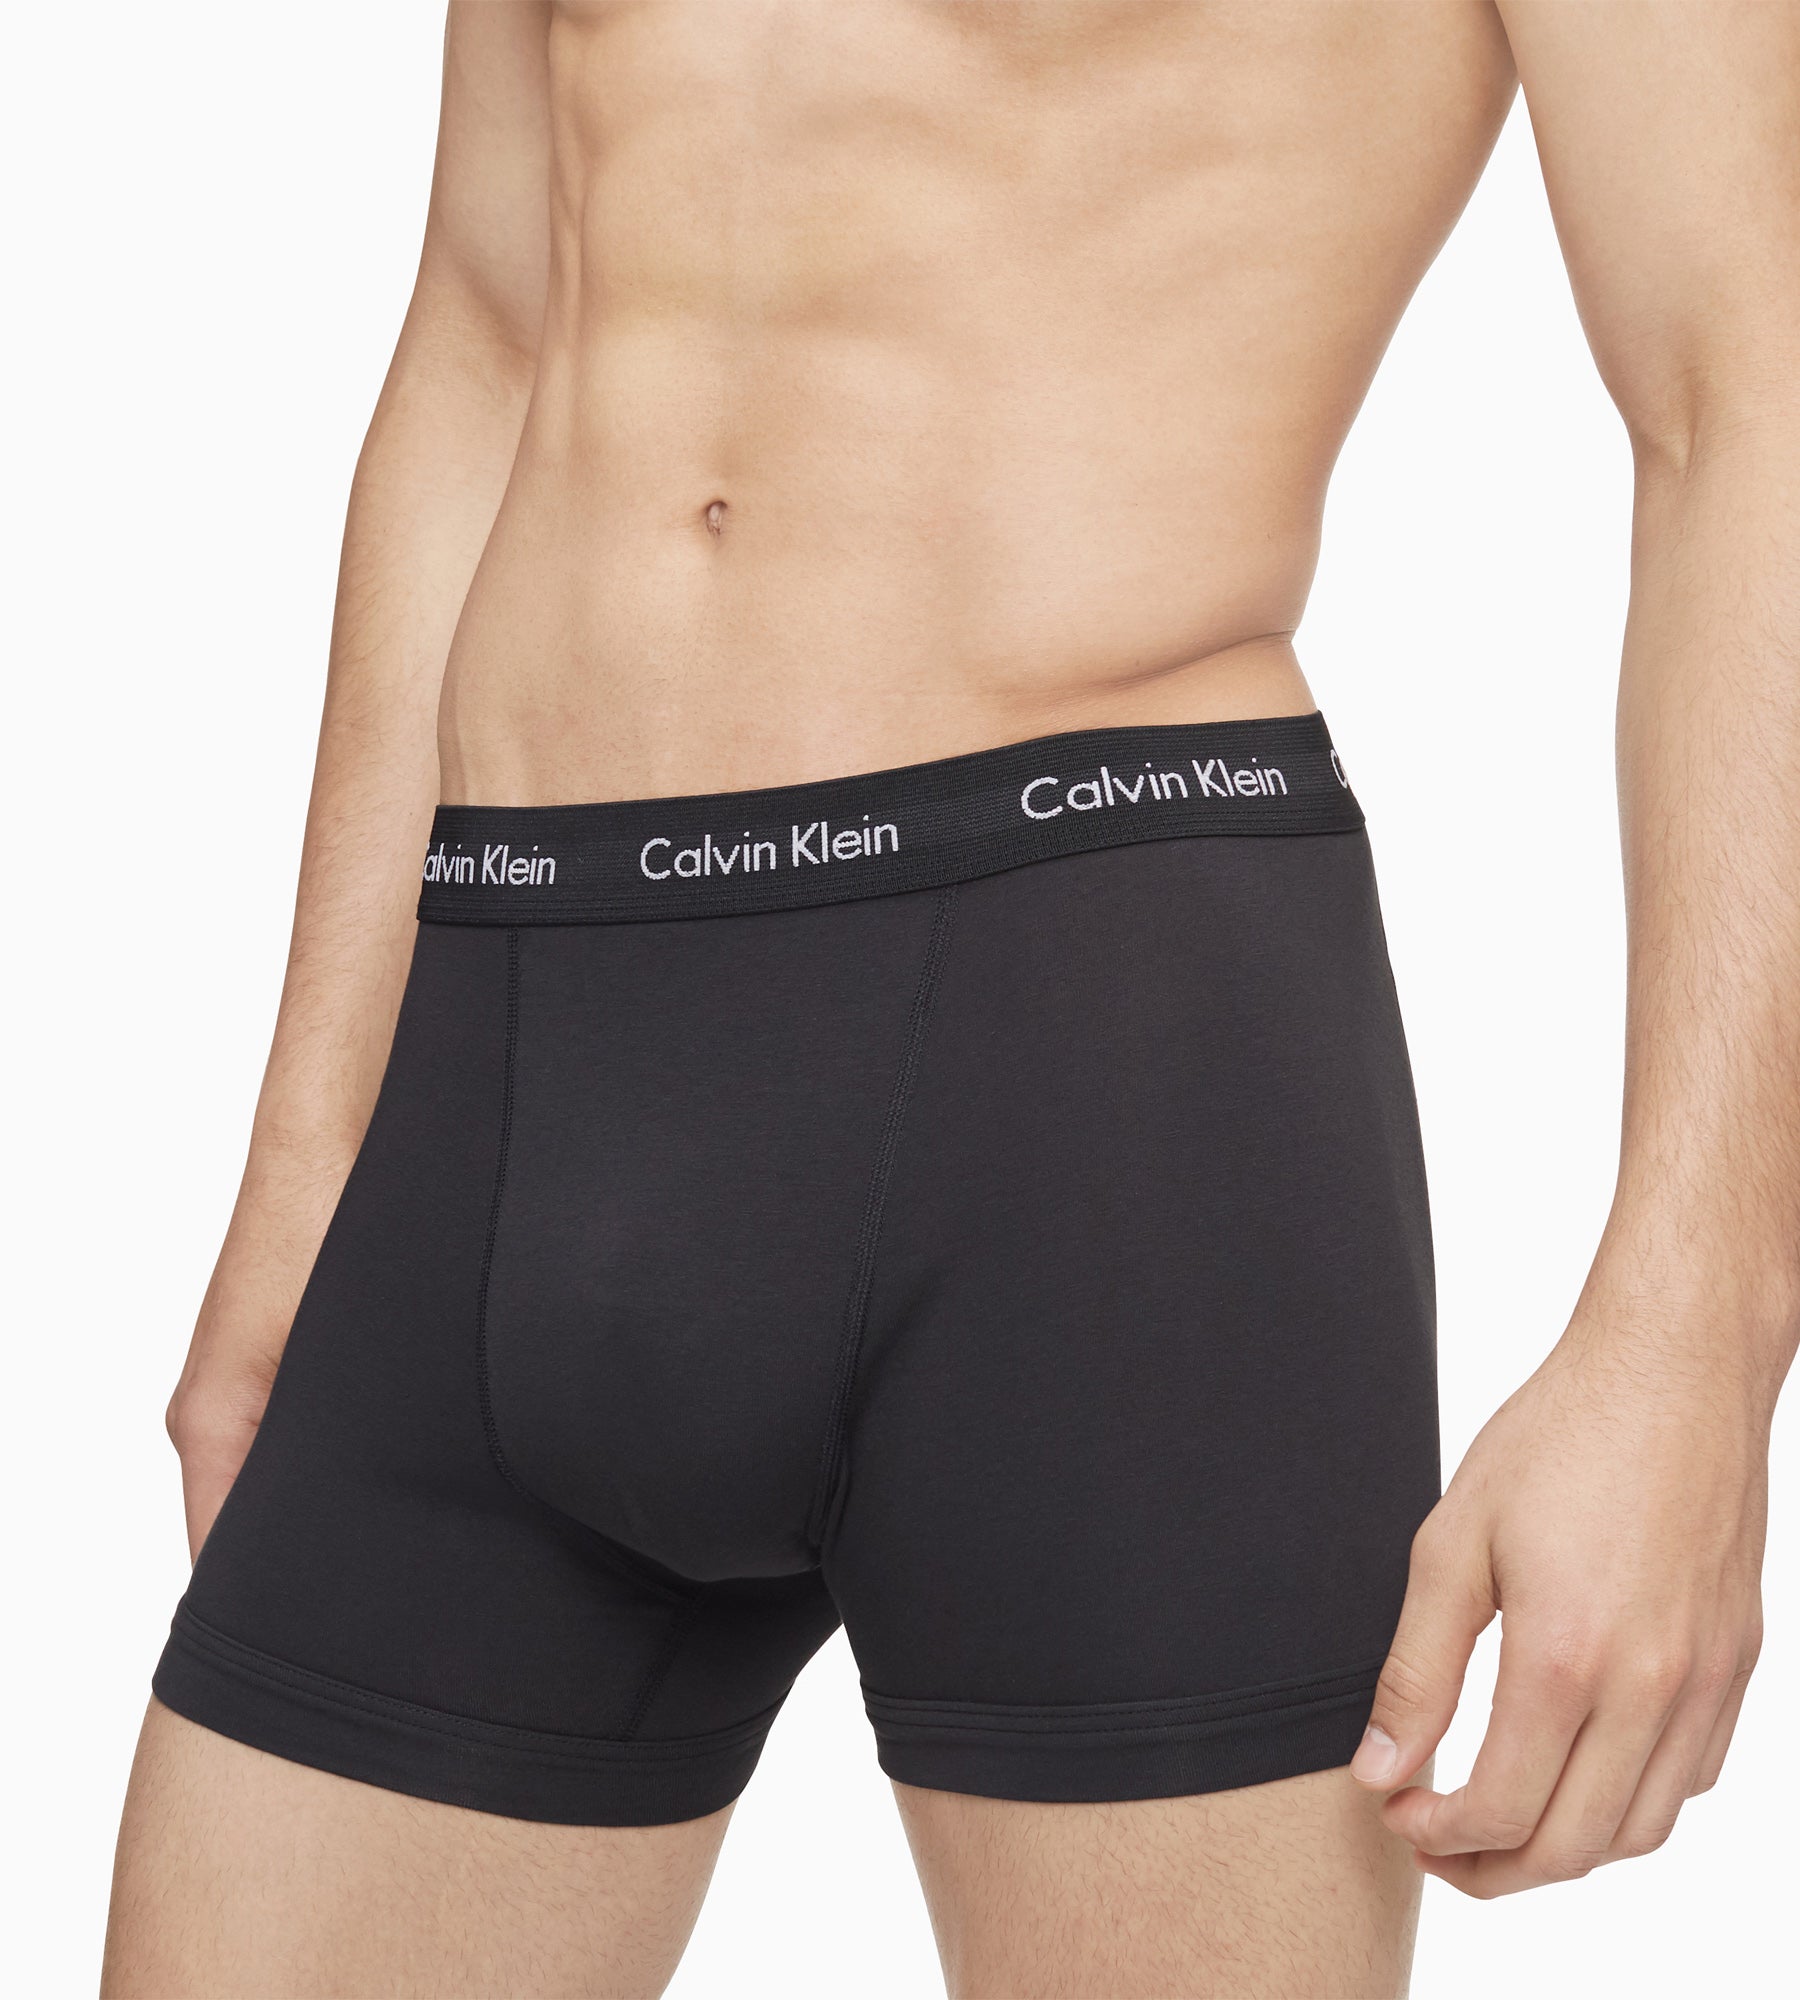 Wholesale KL Mens Underwear Boxer Briefs 32 Cool Mens Underwear Color Ways  Multipack Value 6 Pack at Men's Clothing store